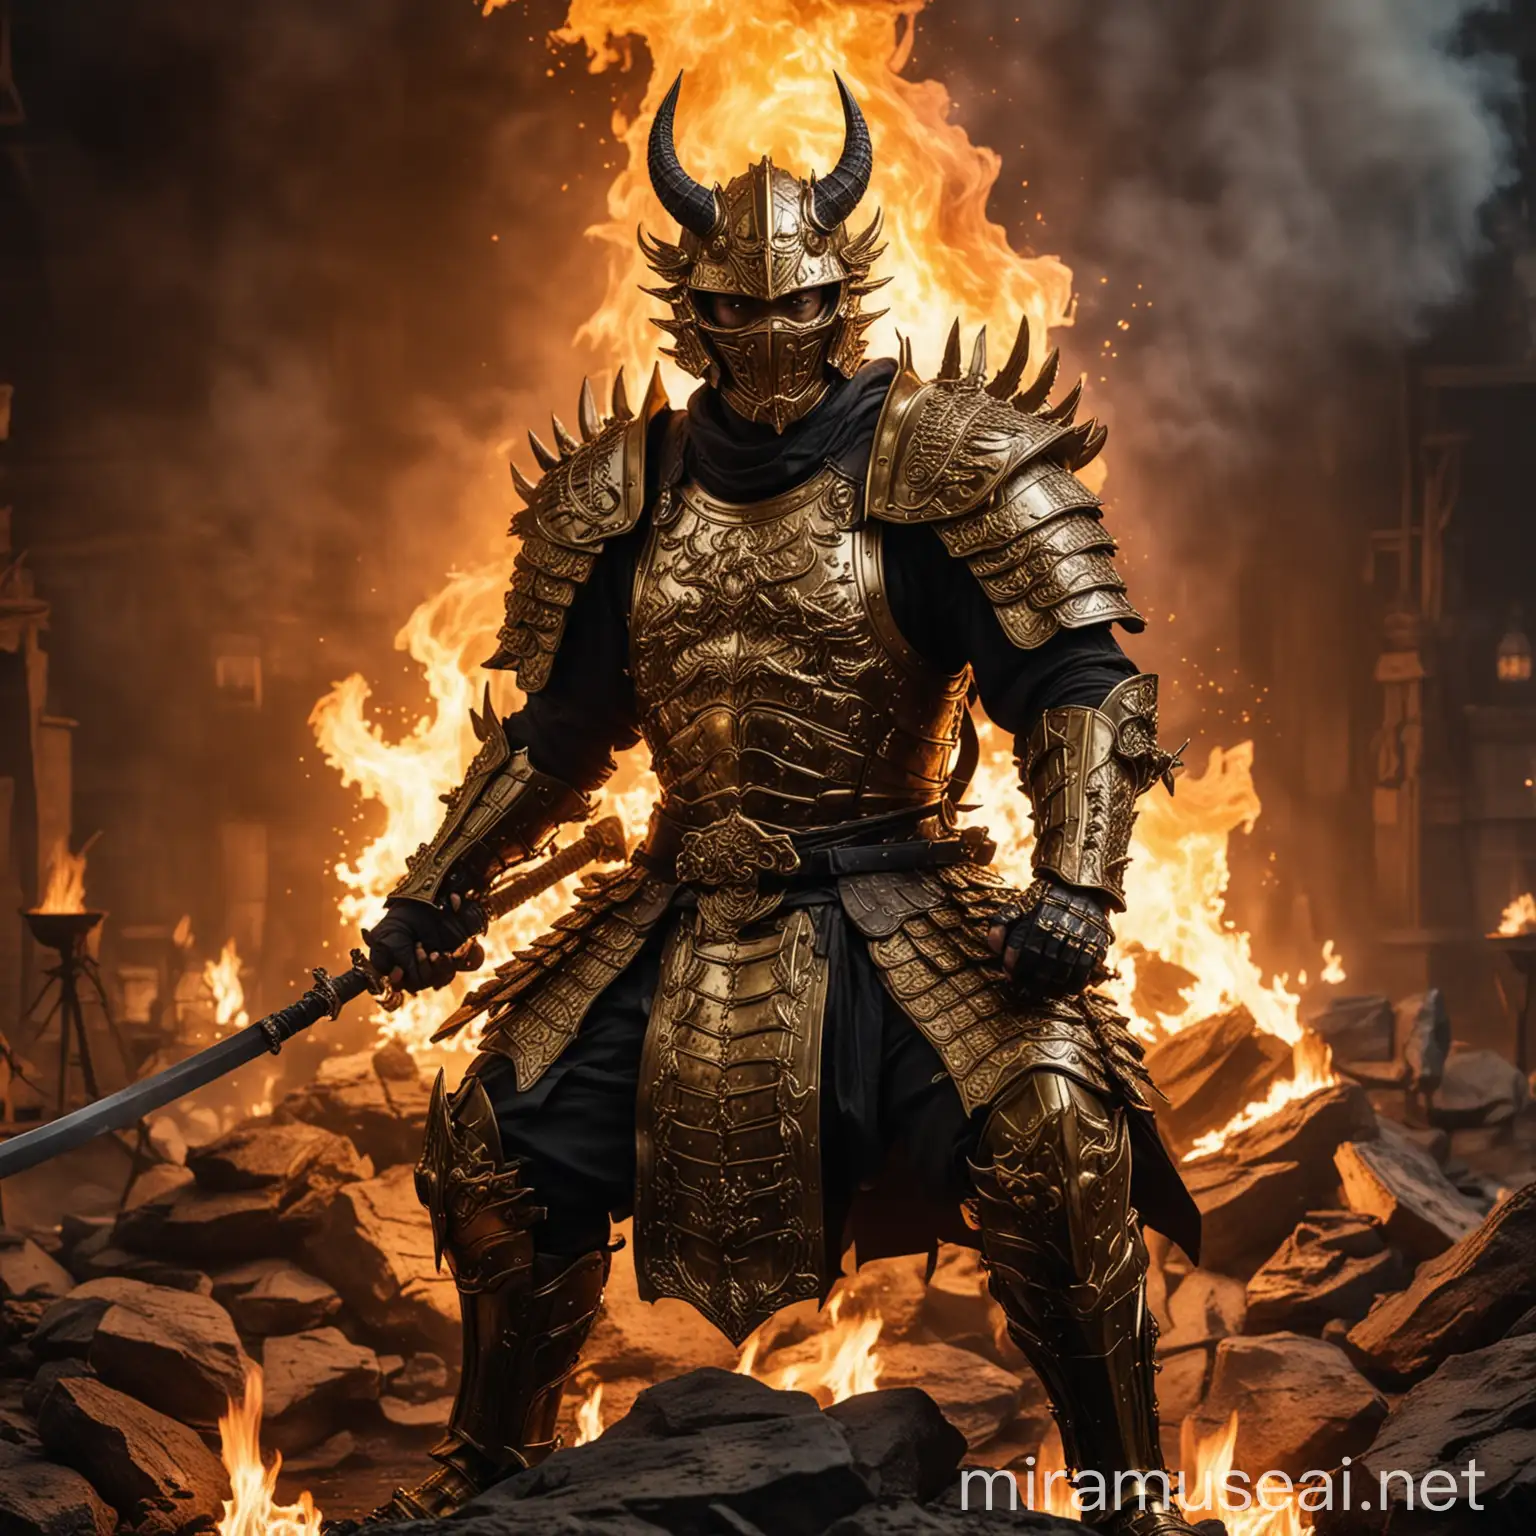 Black Samurai Warrior in Gold Dragon Armor Raises Whiskey in Firelight